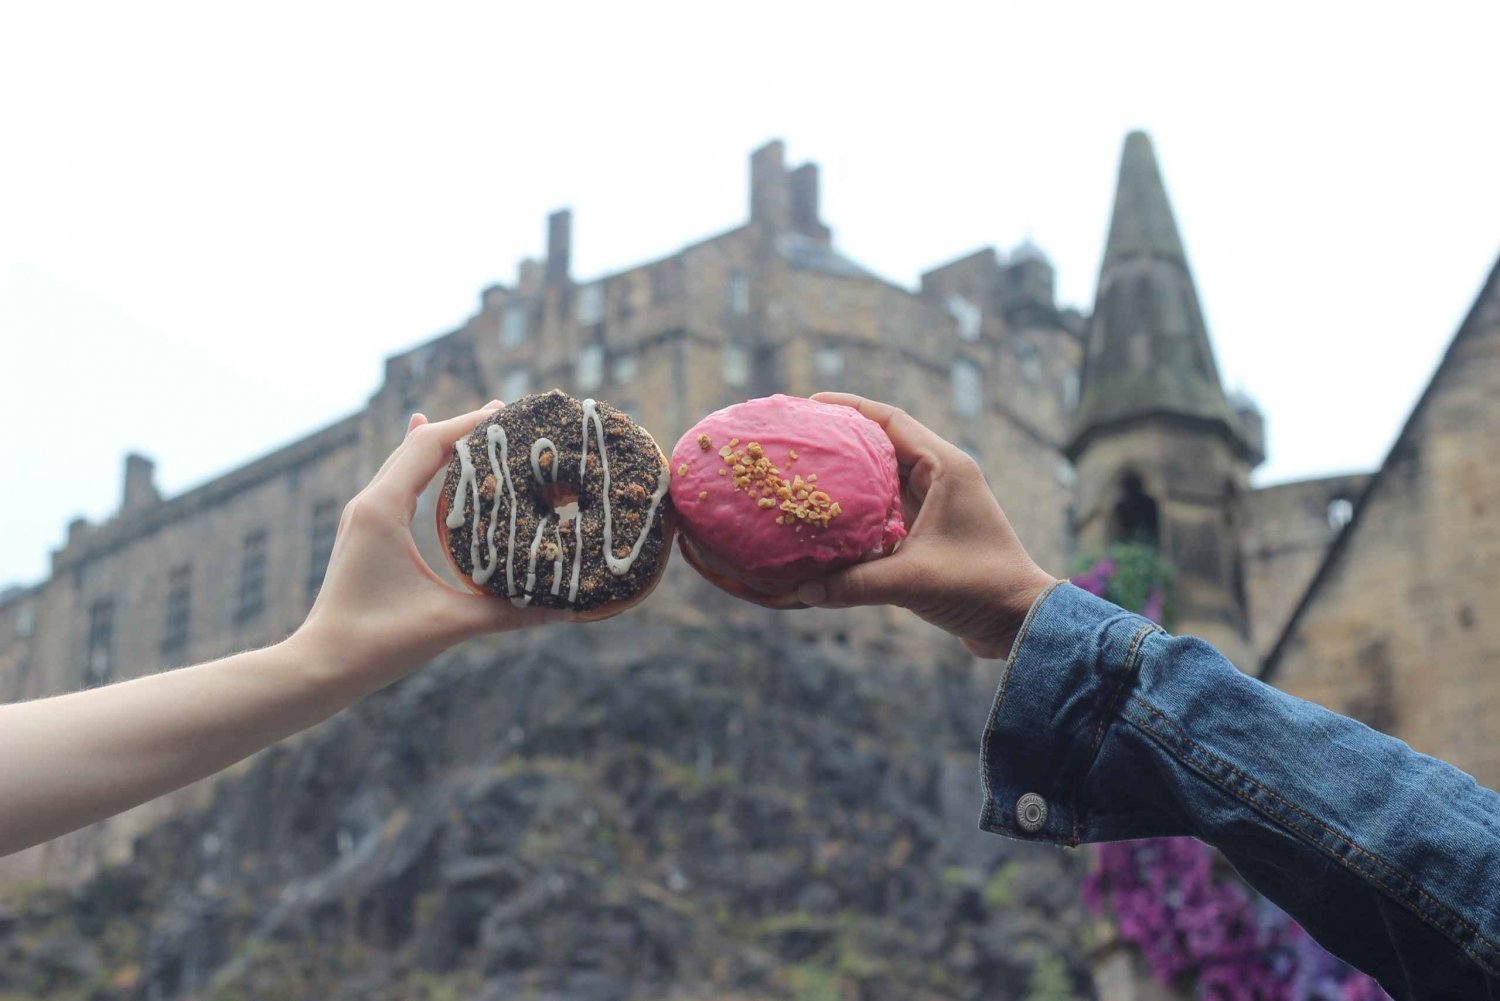 Historisk Edinburgh Donut-eventyr med Underground Donut Tour